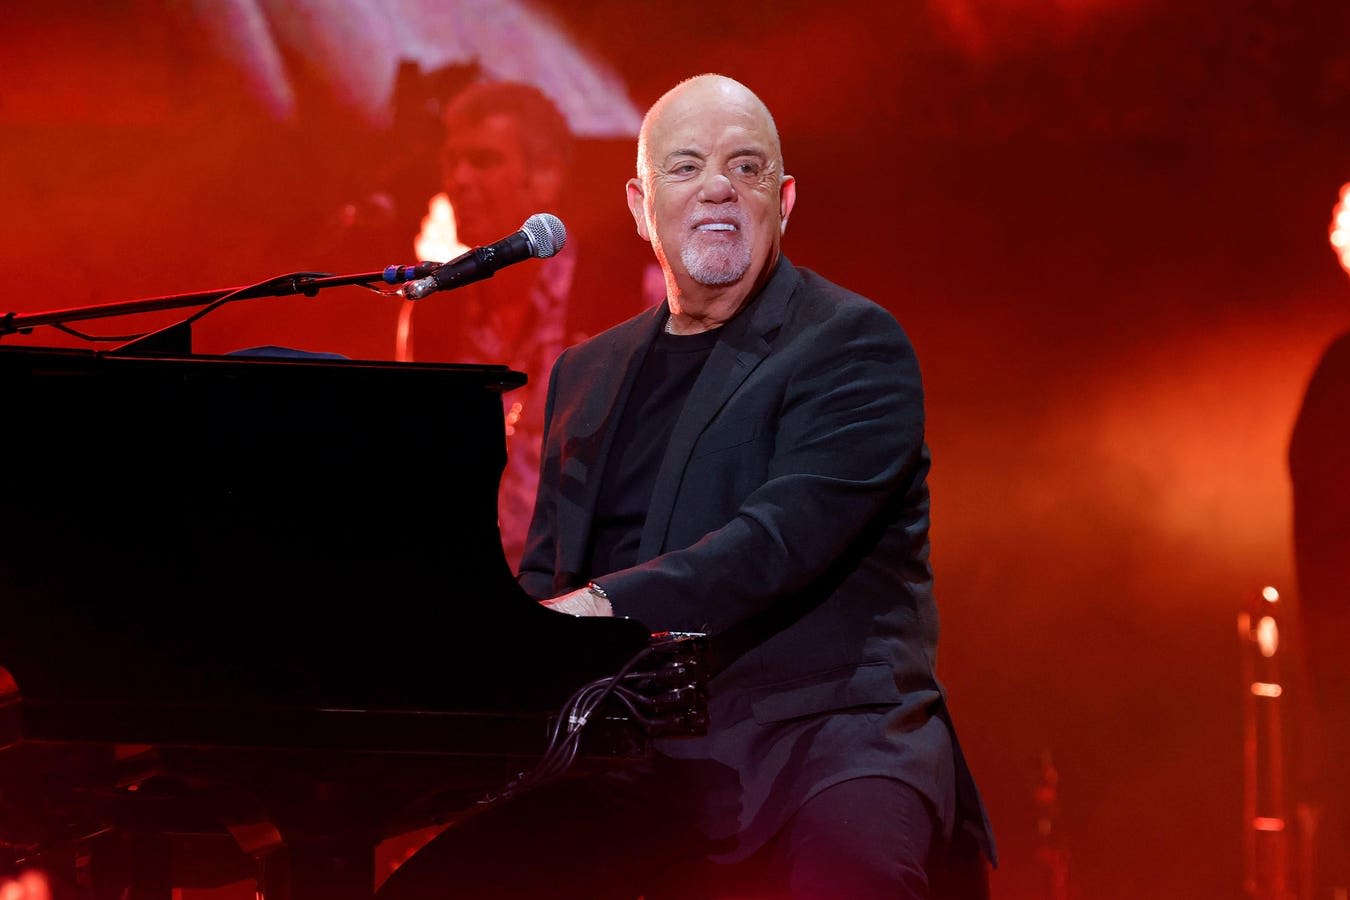 Billy Joel At 75: Piano Man’s 5 Best Ballads Ranked